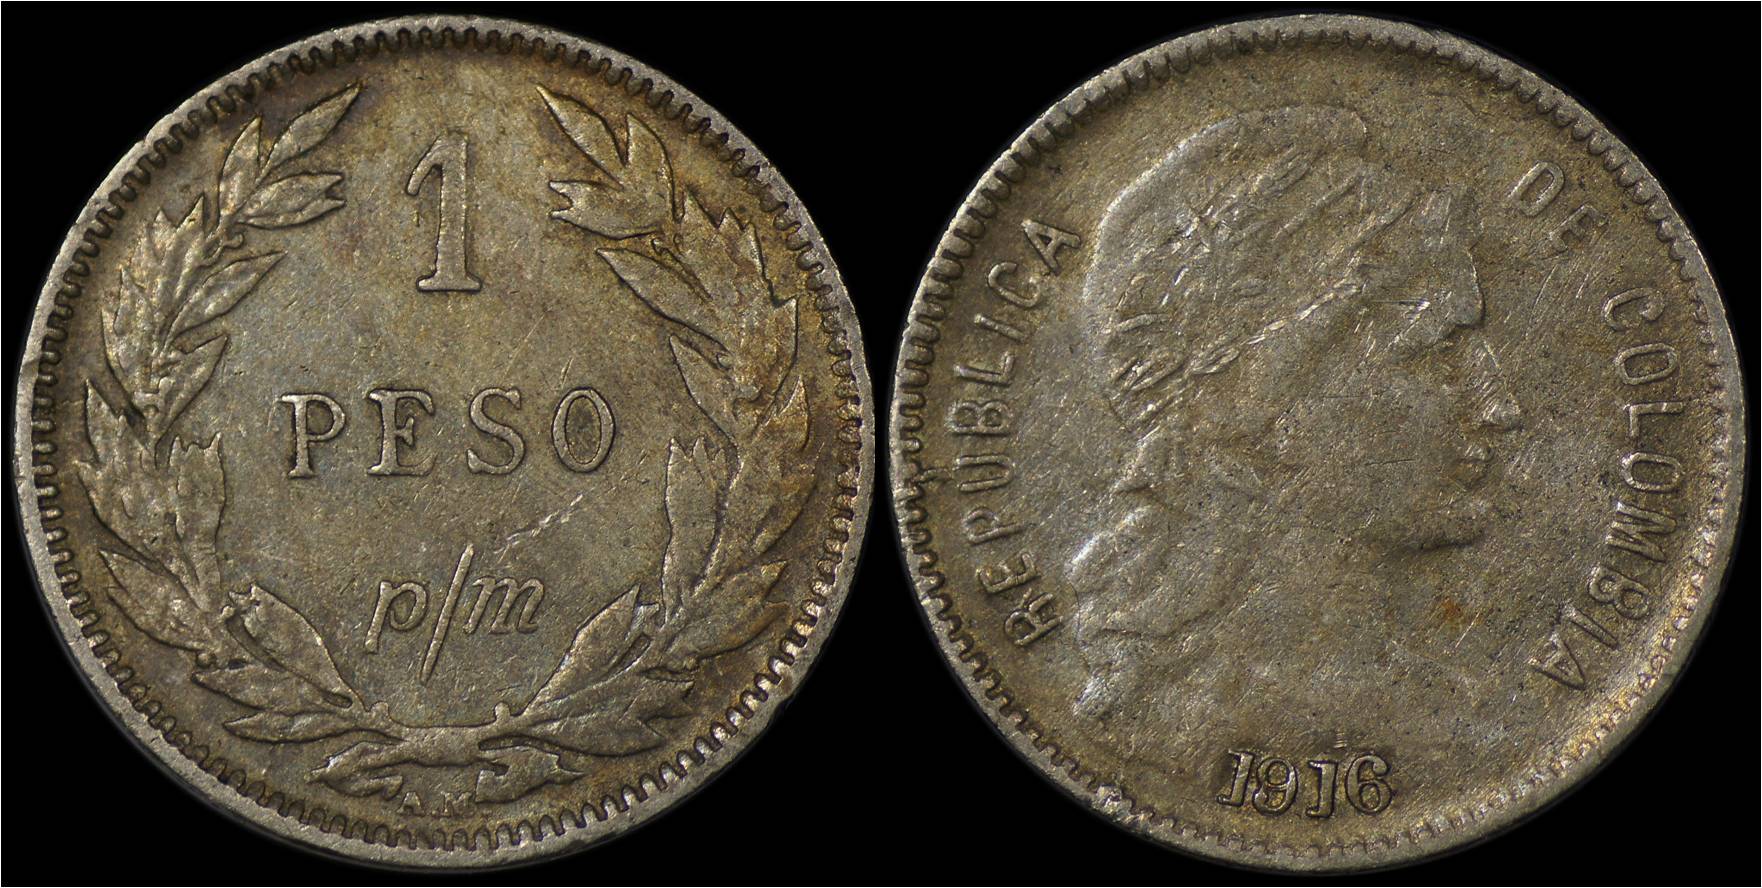 KM A279 Colombia 1916-AM peso p_m.jpg